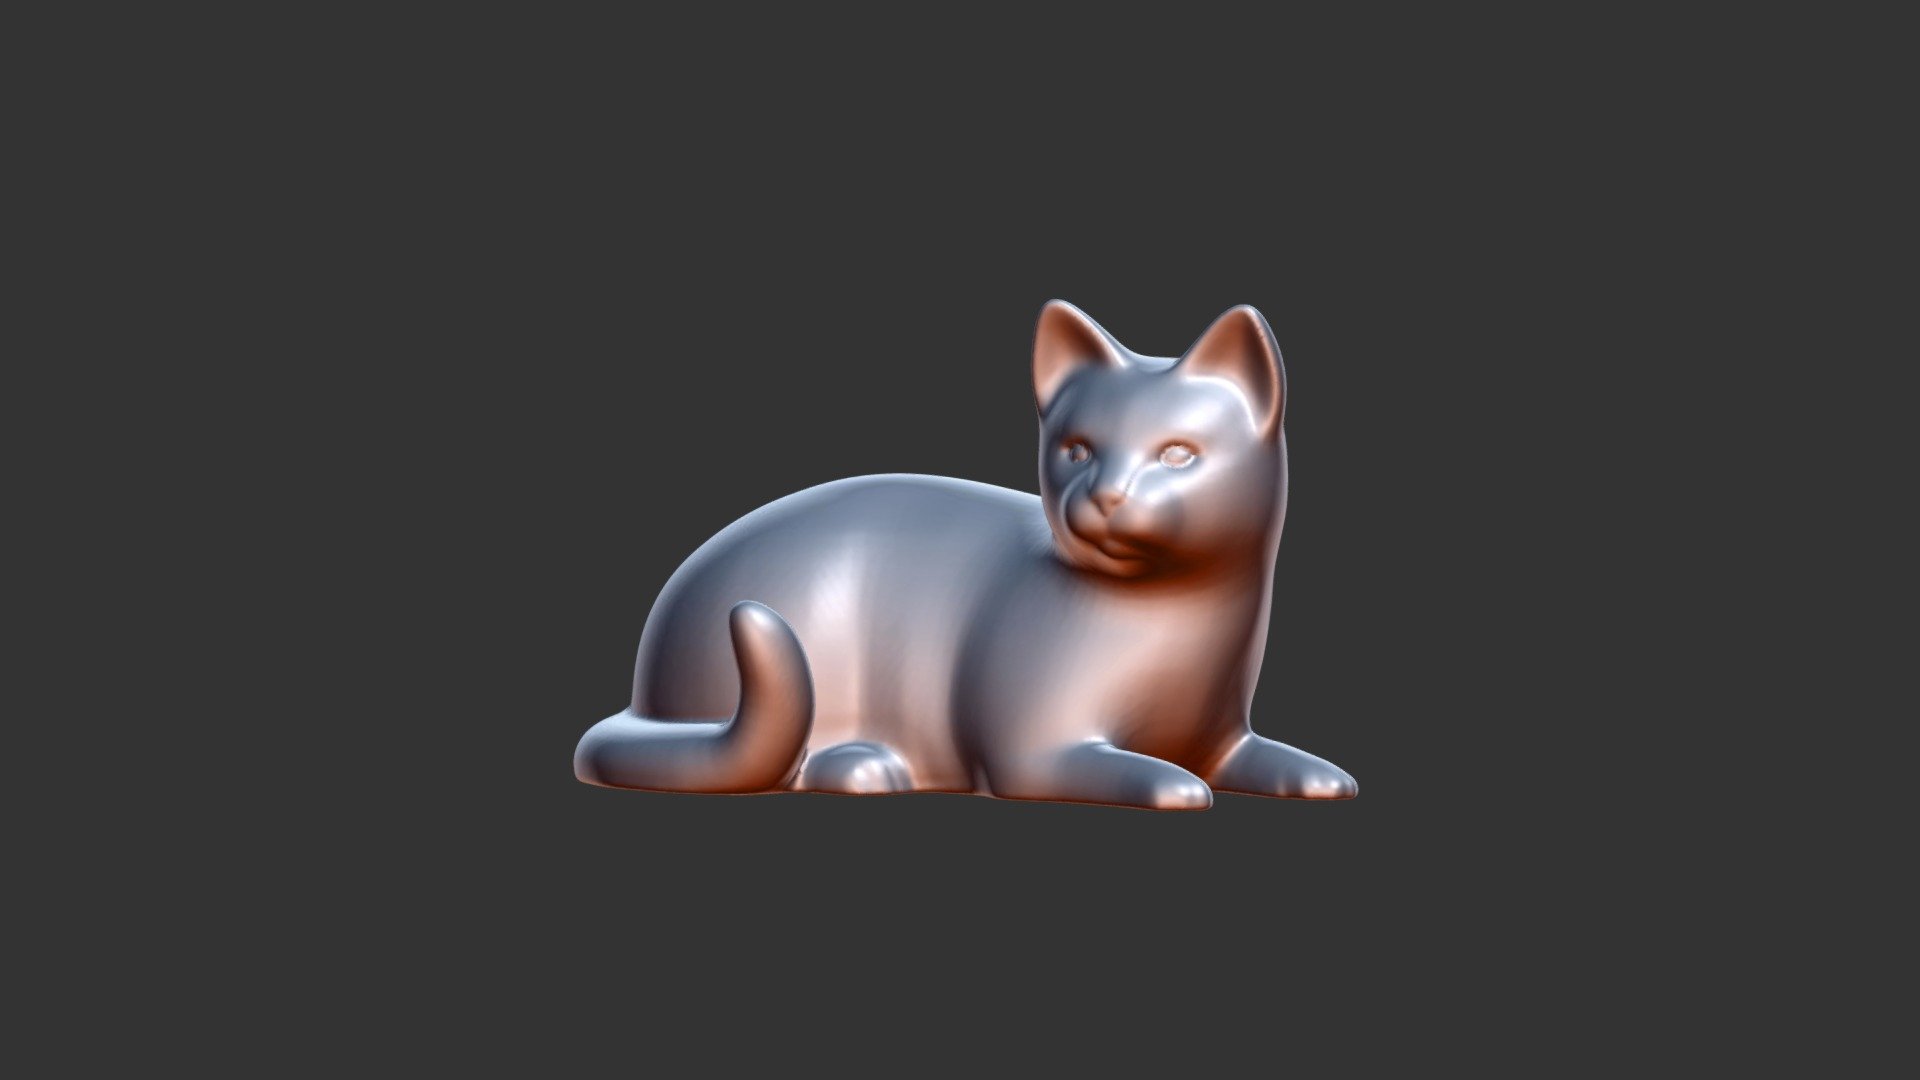 Statue Cat / Kot / Katze